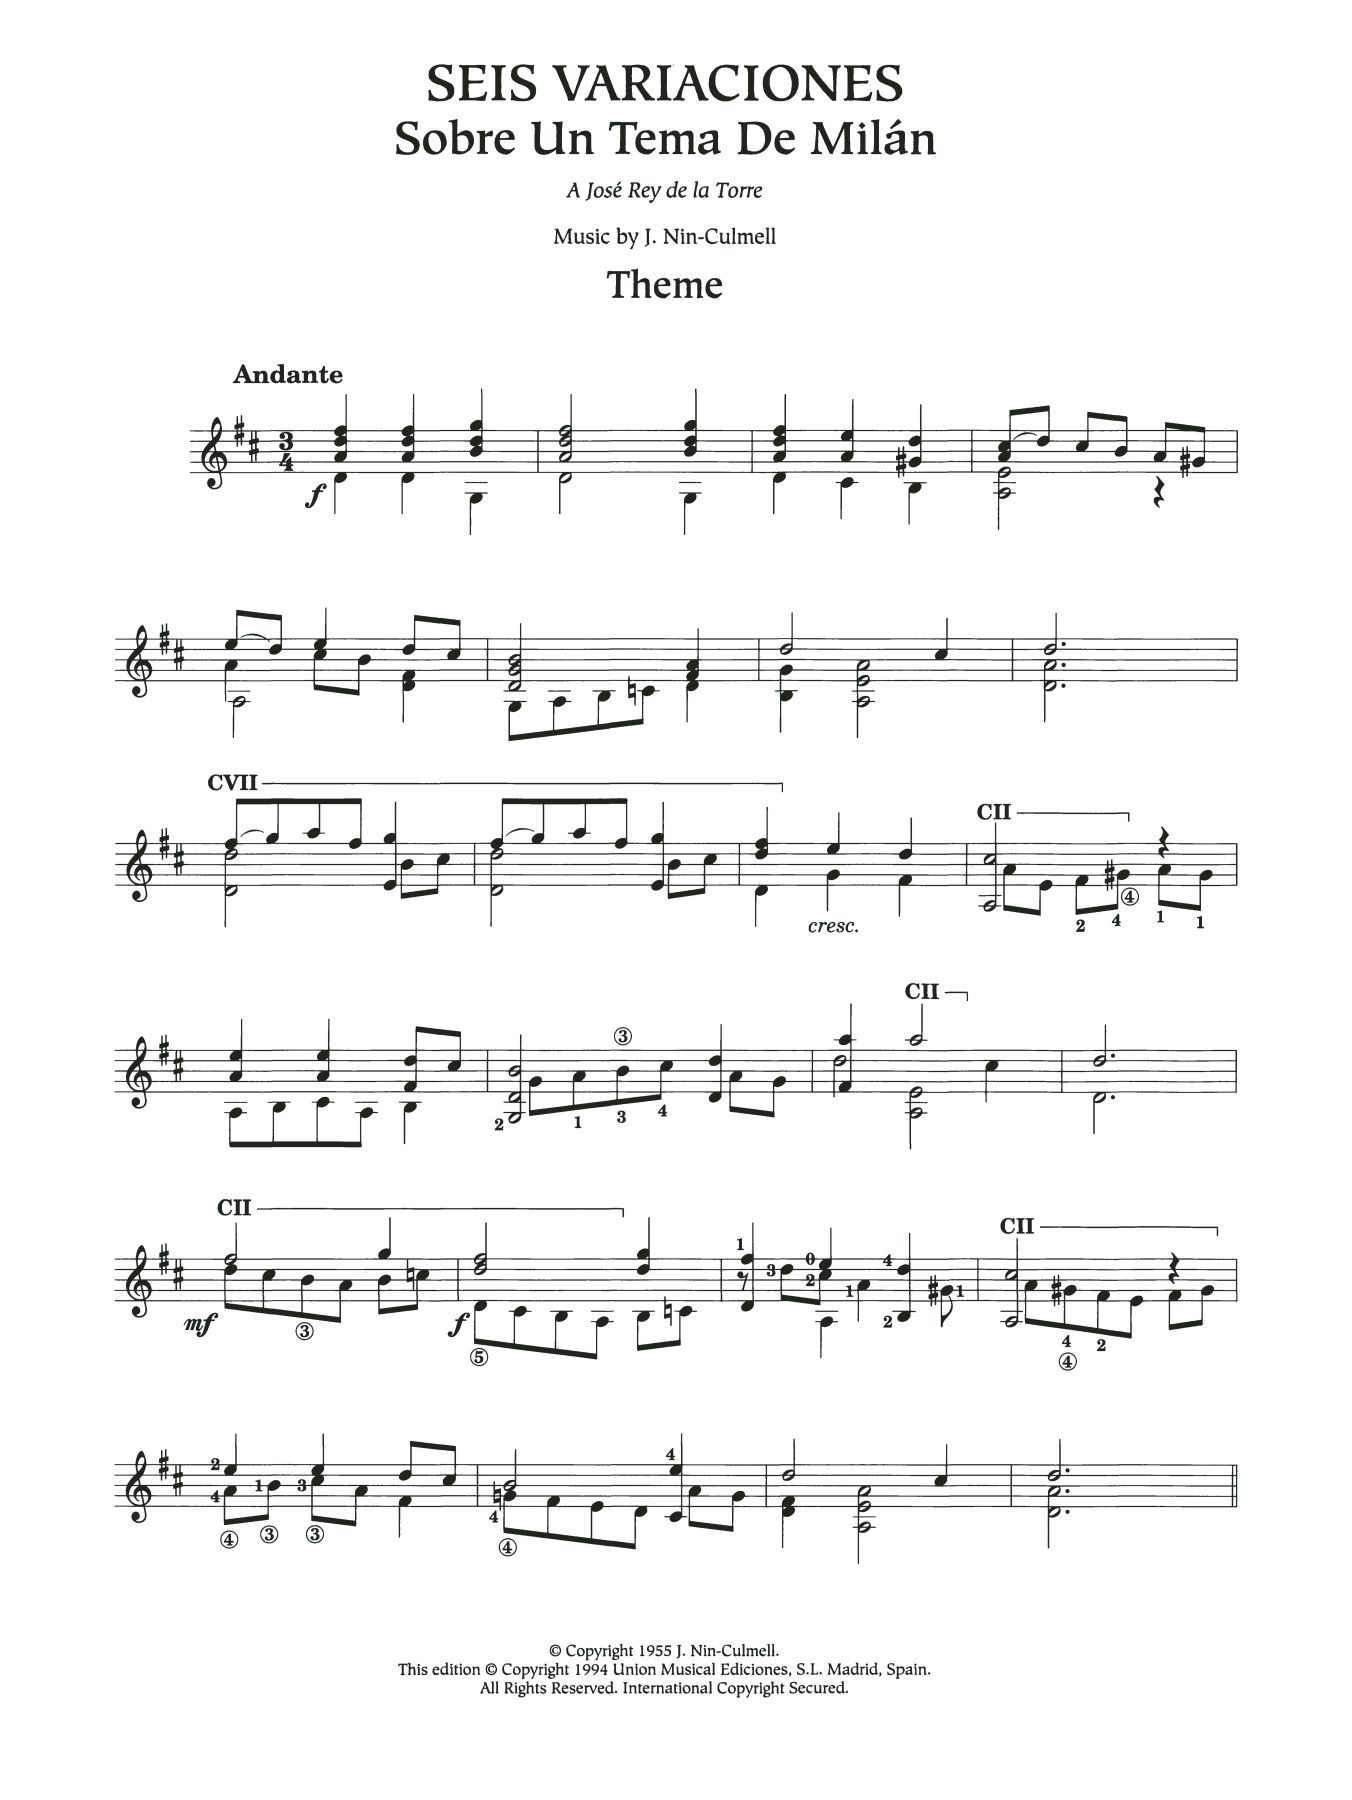 Joaquín Nin-Culmell Seis Variaciones Sheet Music Notes & Chords for Guitar - Download or Print PDF